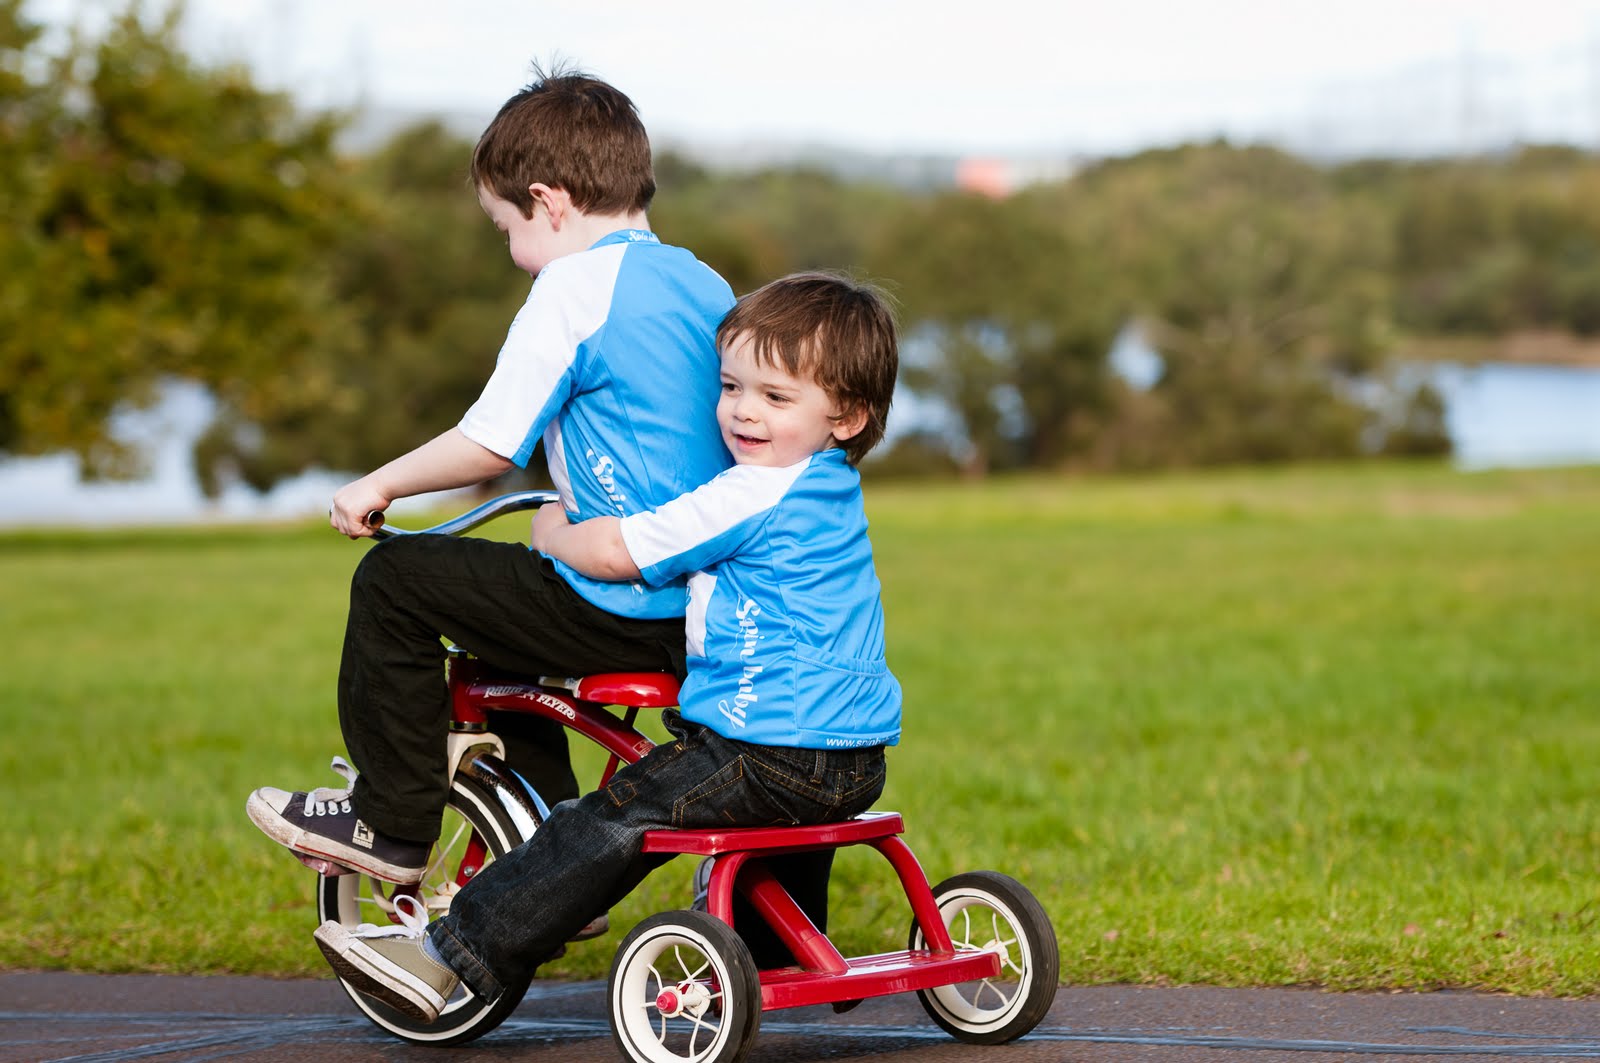 Spinning babies. Kid Wear Stroller. Cycle Baby Mini Seat. Boy feel Bike with mom.